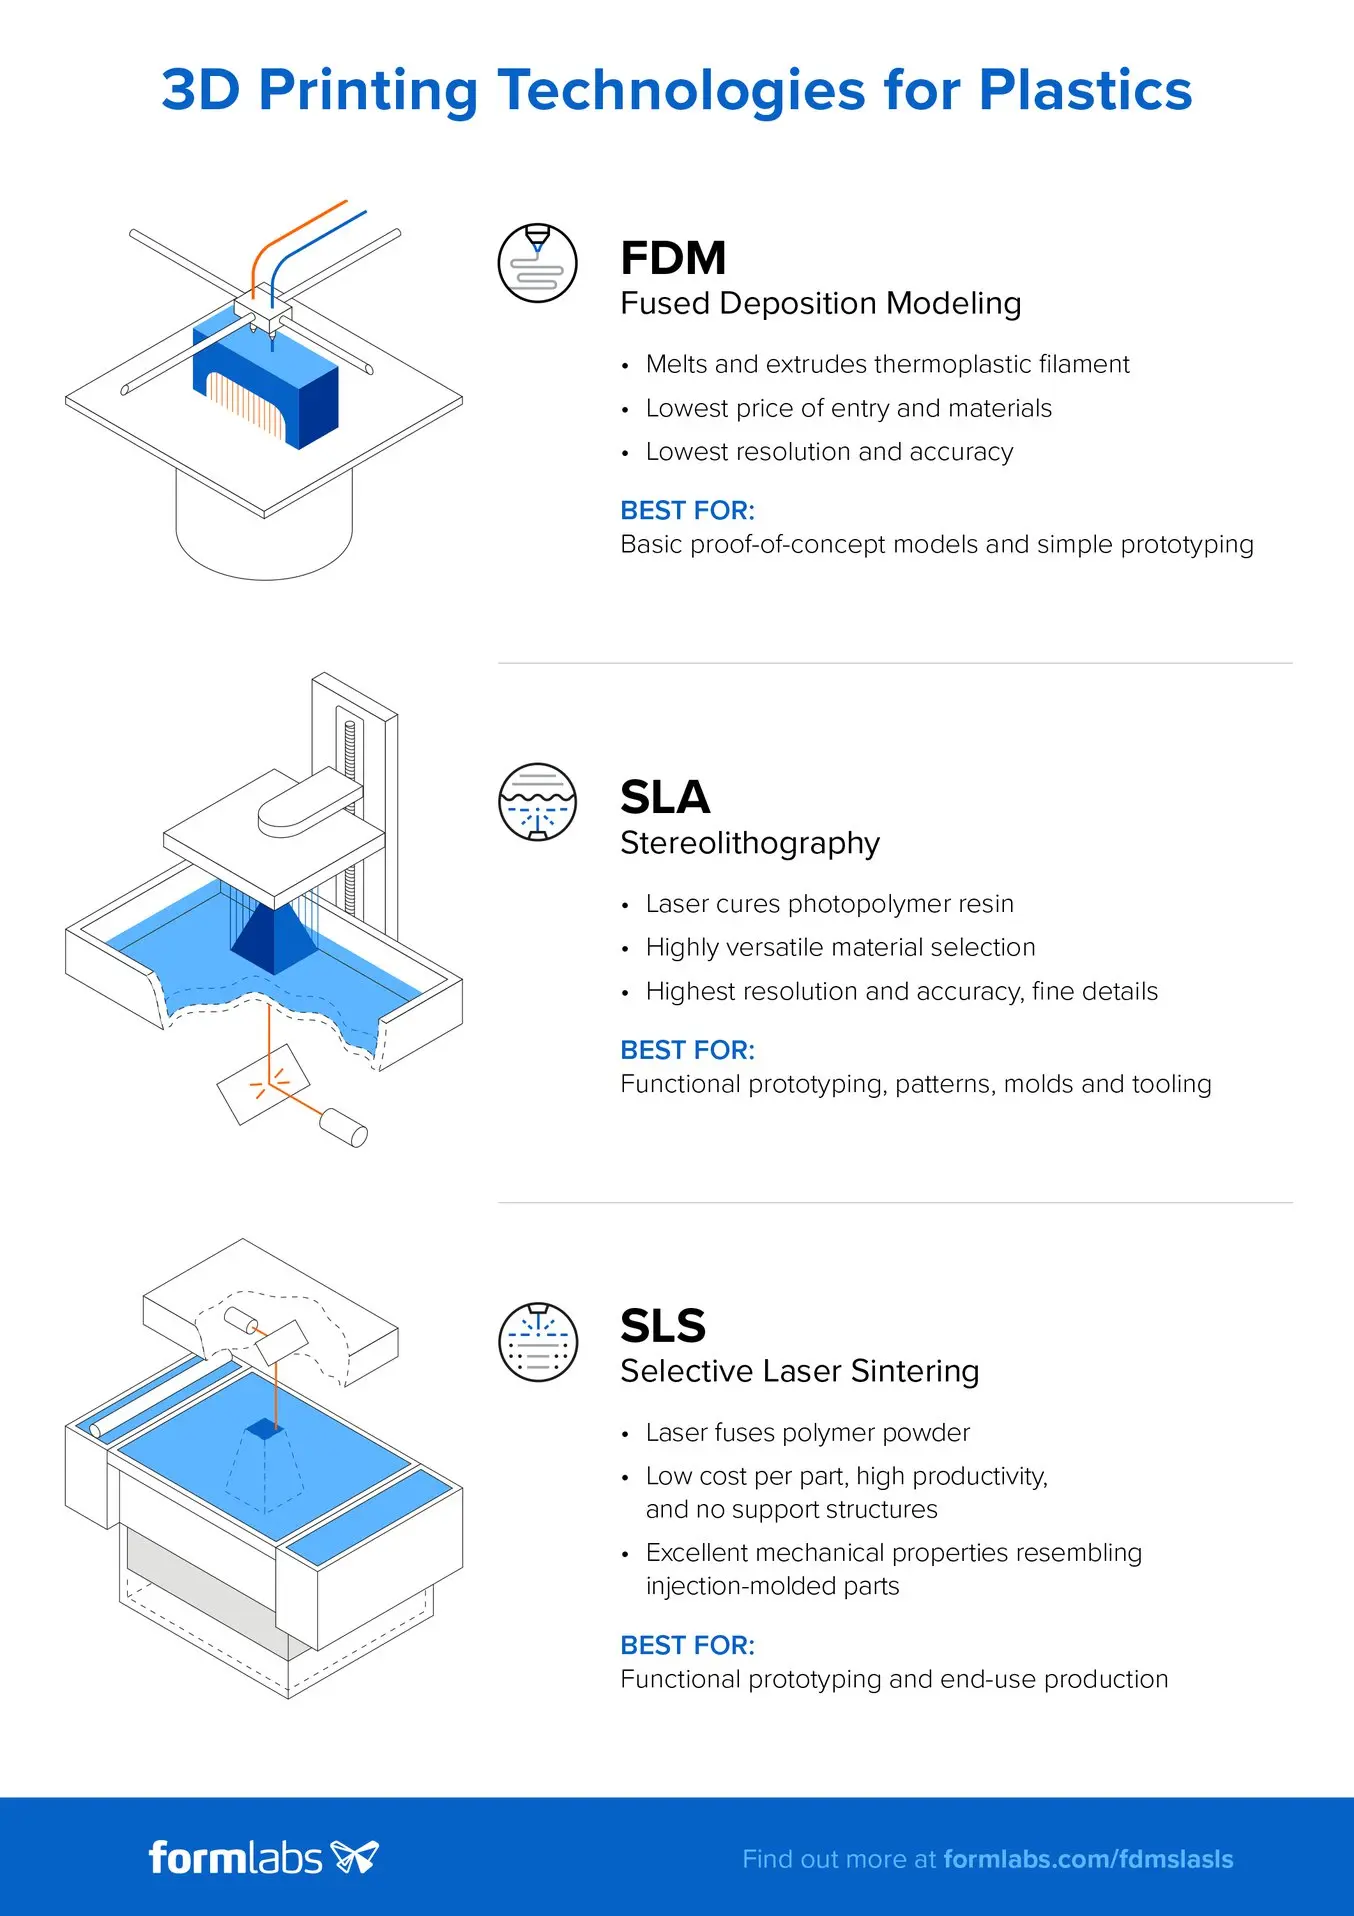 FDM vs SLA vs SLS comparison - 3D printing technologies for plastics - Infographic